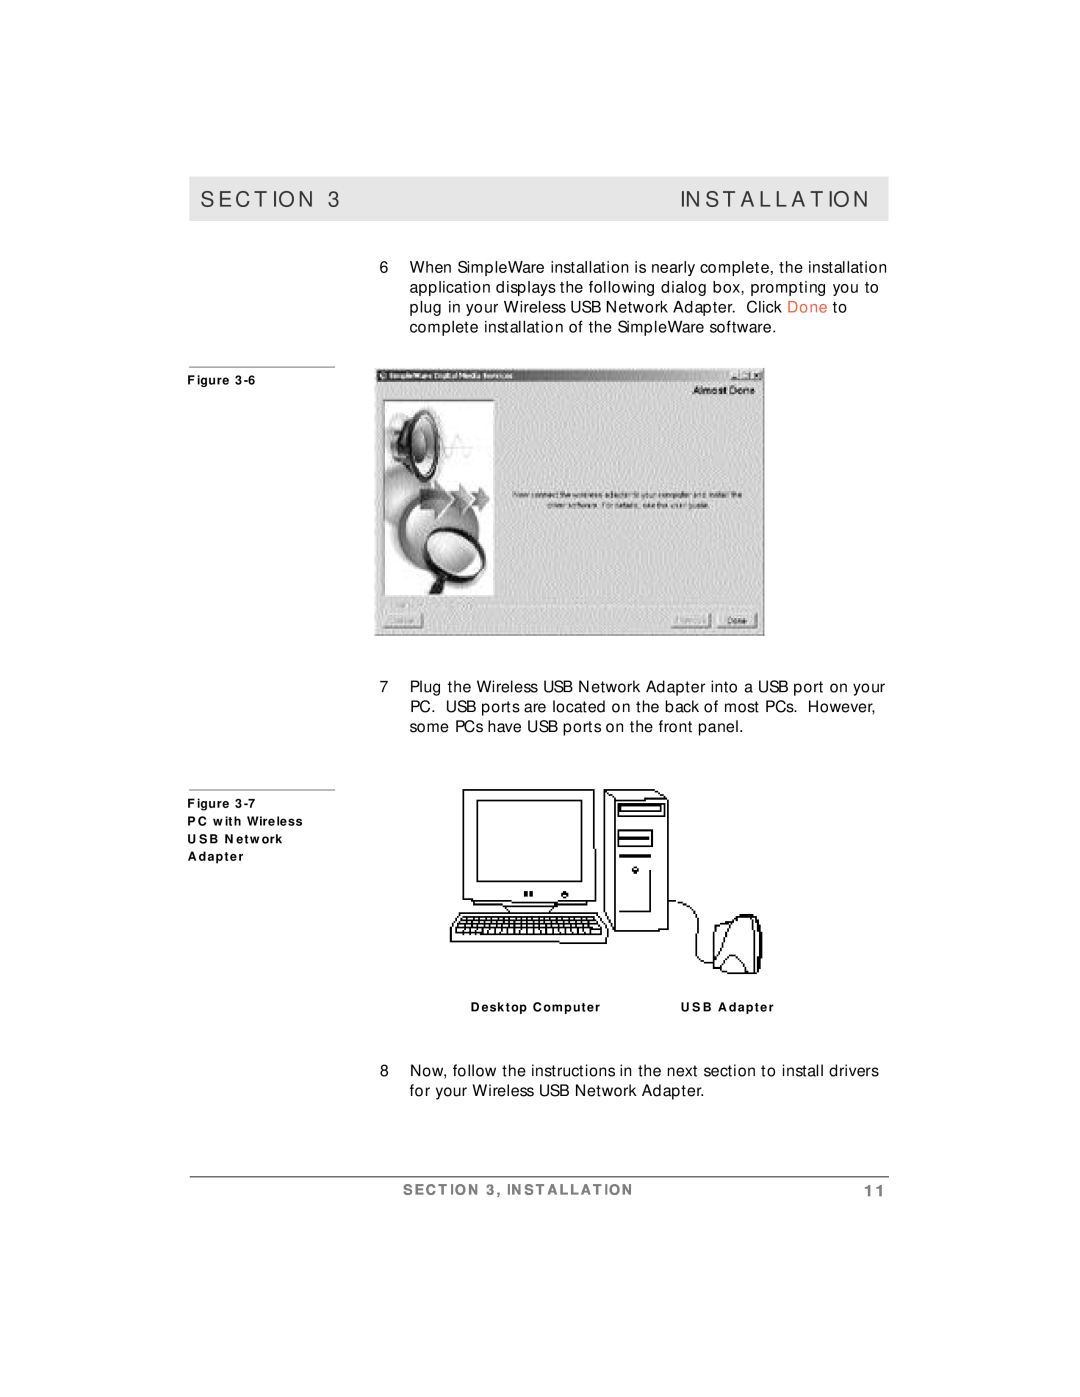 Motorola simplefi manual Section, Installation, Figure PC with Wireless USB Network Adapter, Desktop Computer, USB Adapter 